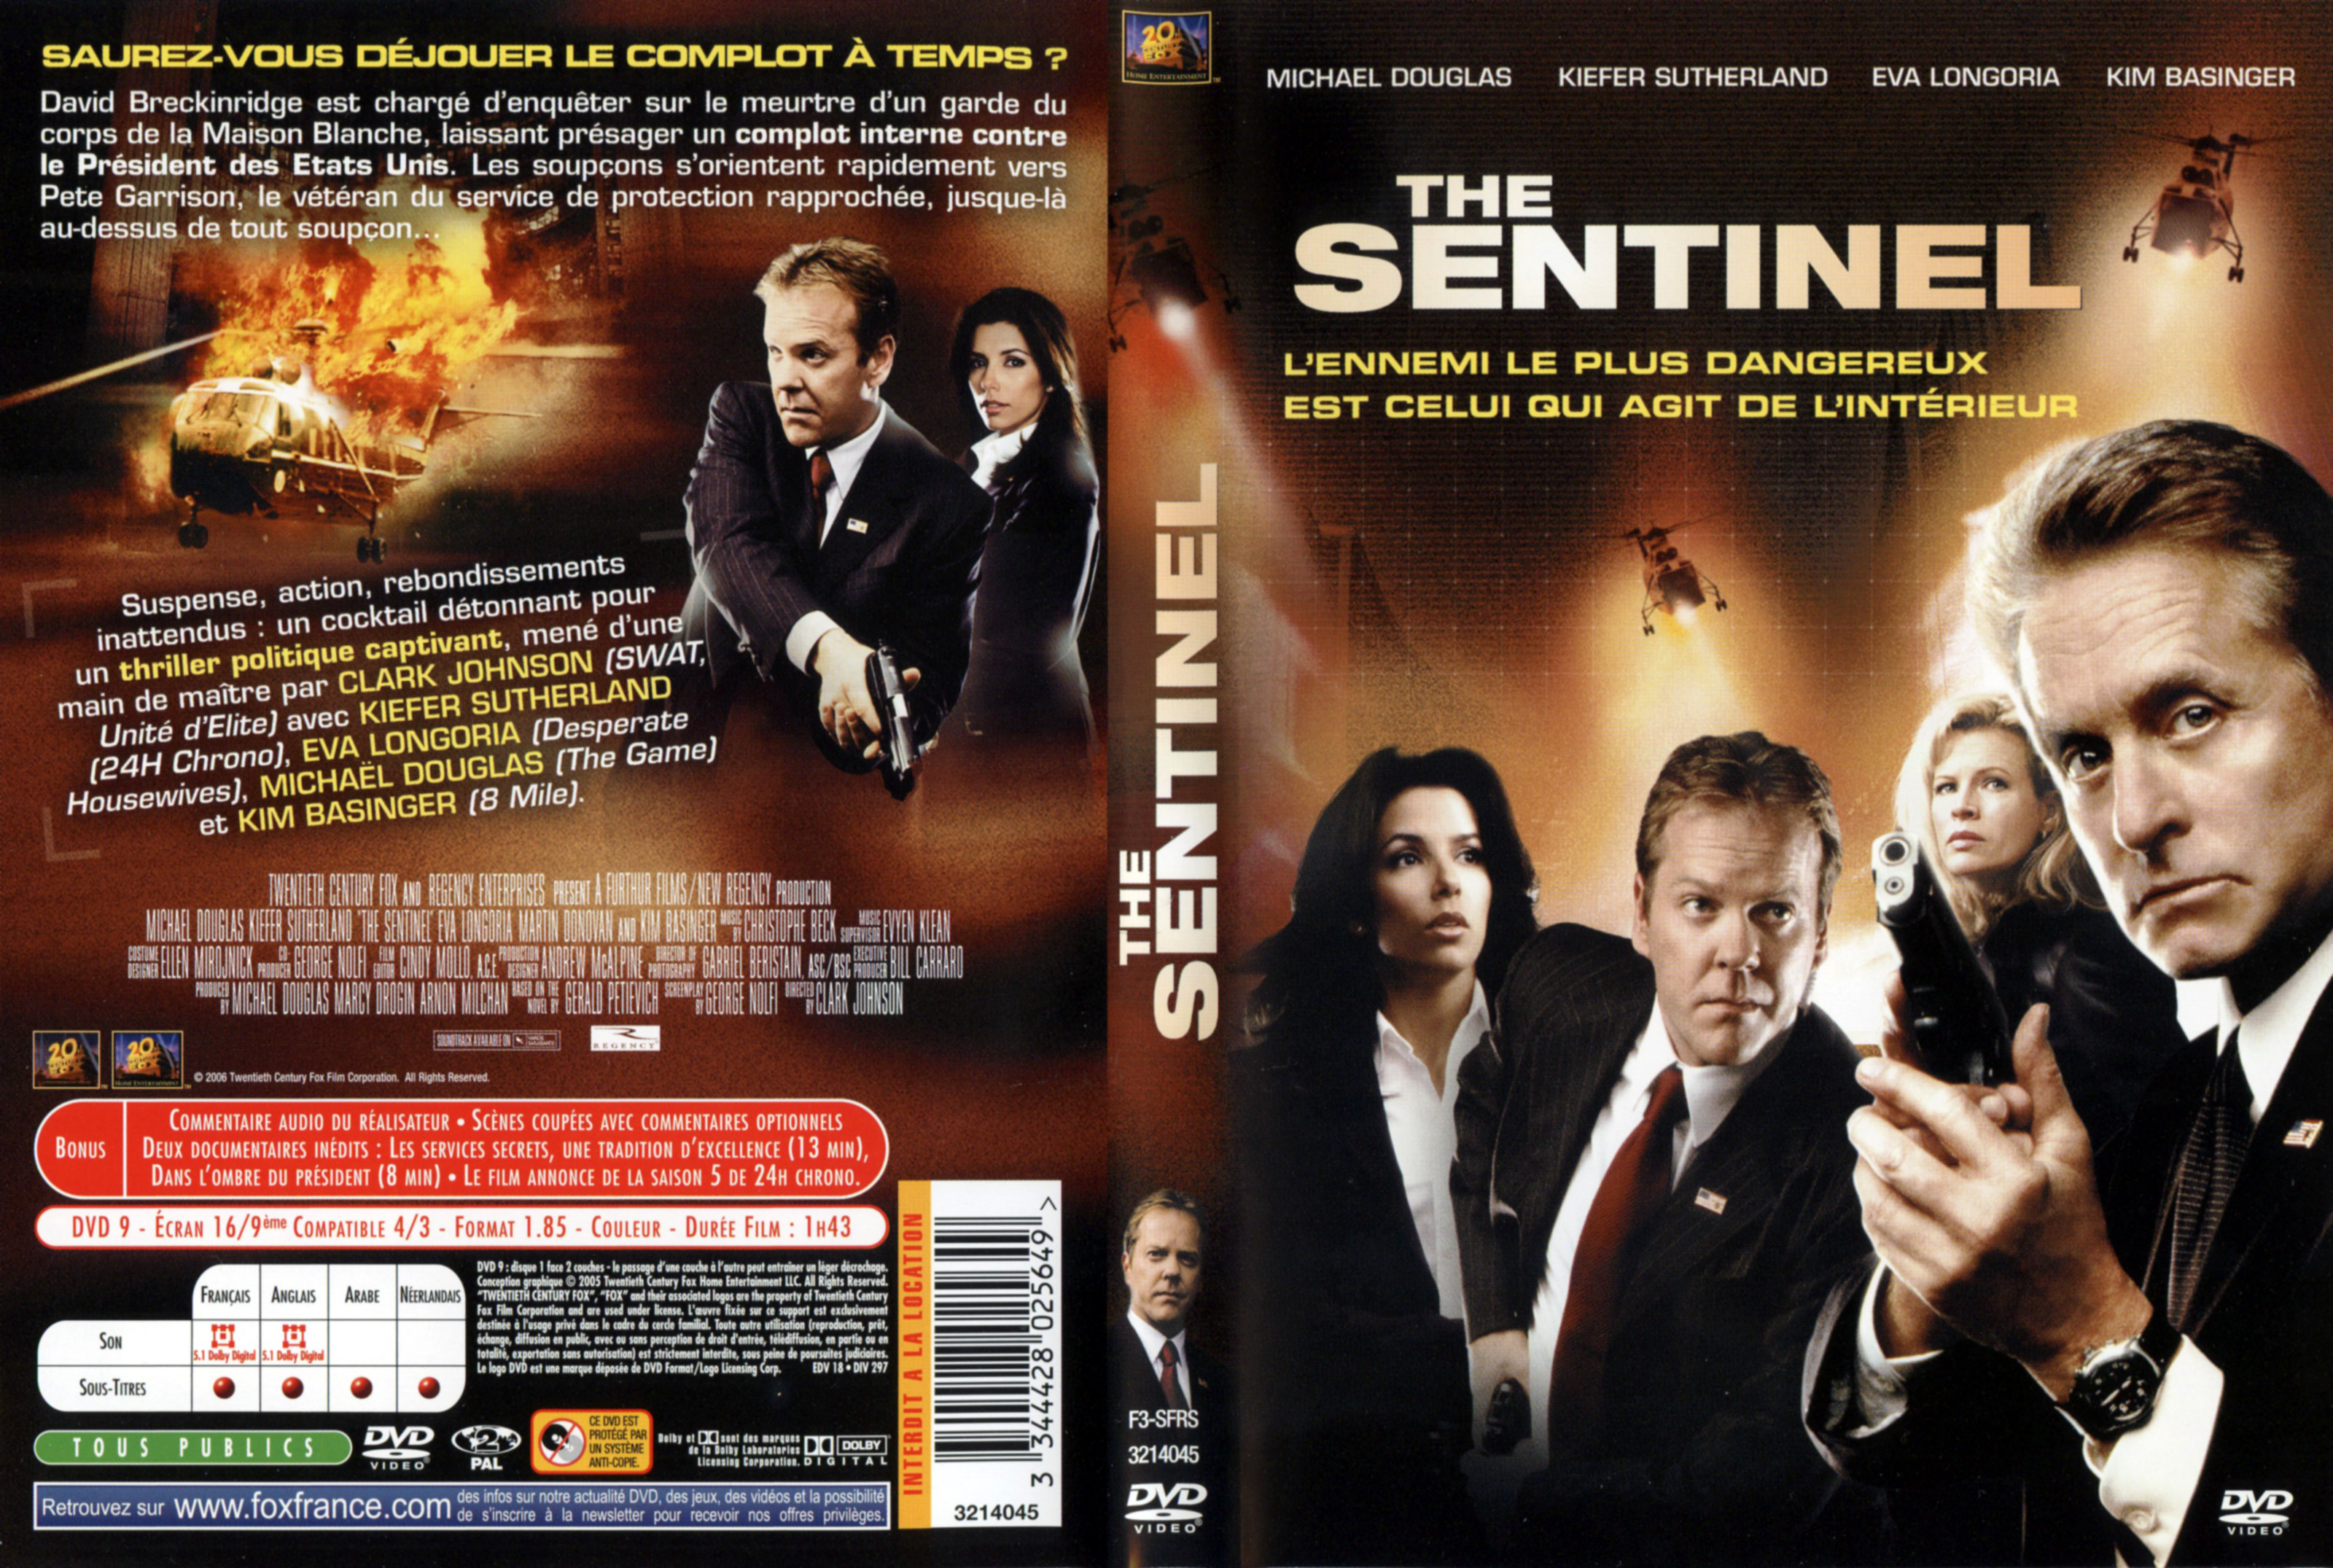 Jaquette DVD The sentinel v3